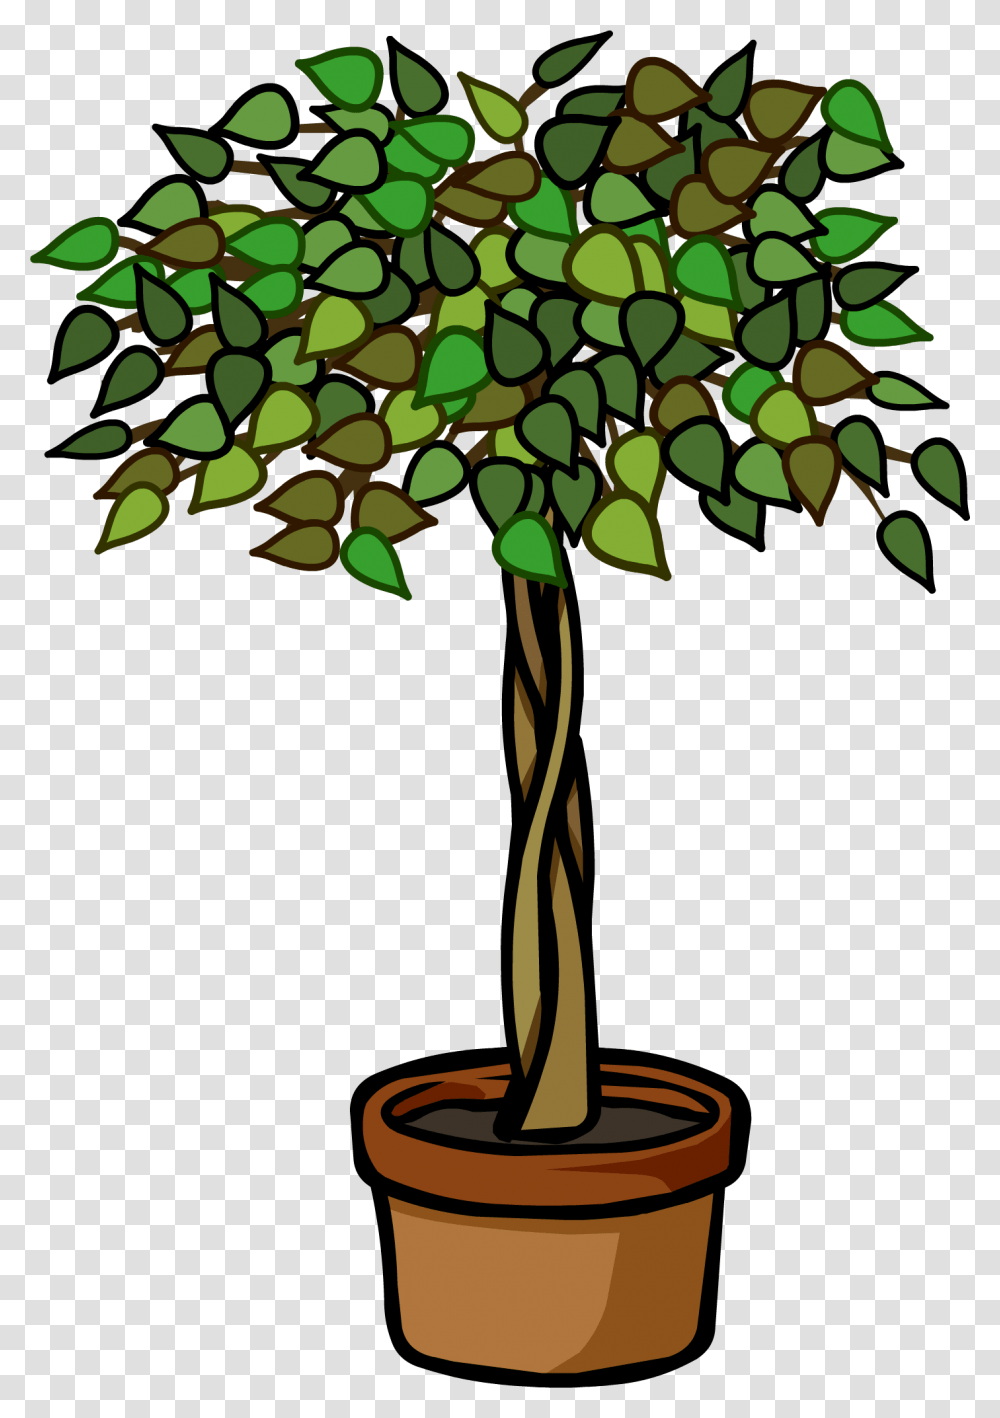 John Cena Clipart Plant Ficus Tree Clip Art, Tree Trunk, Palm Tree, Arecaceae Transparent Png